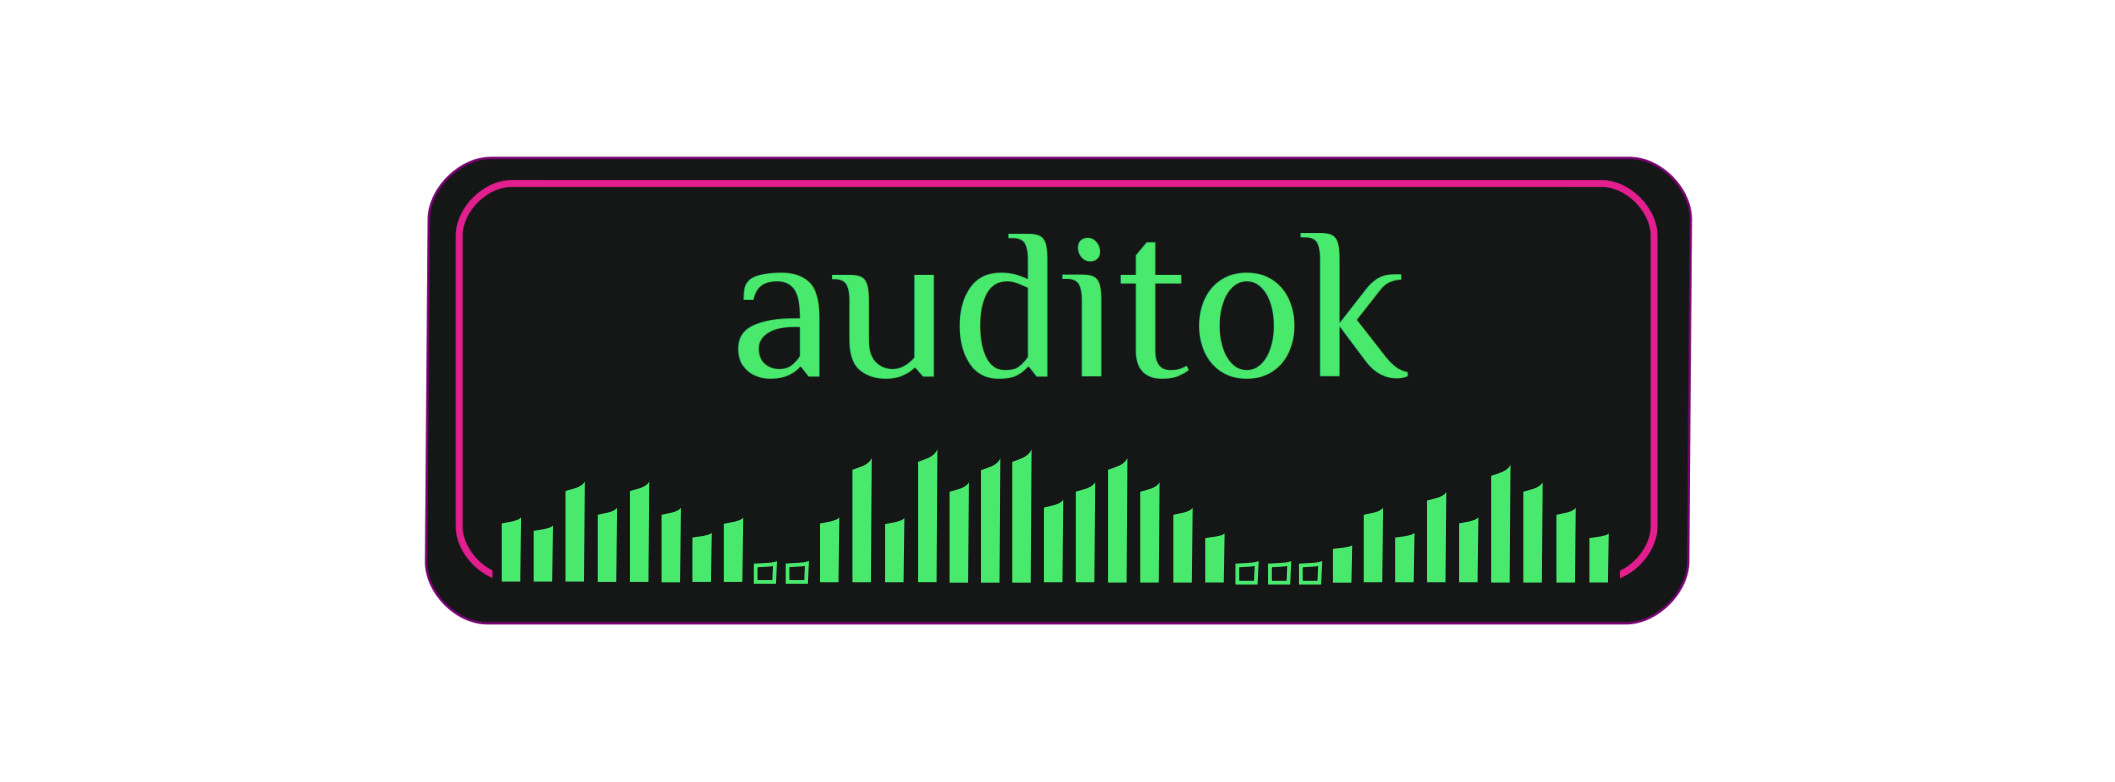 doc/figures/auditok-logo.png